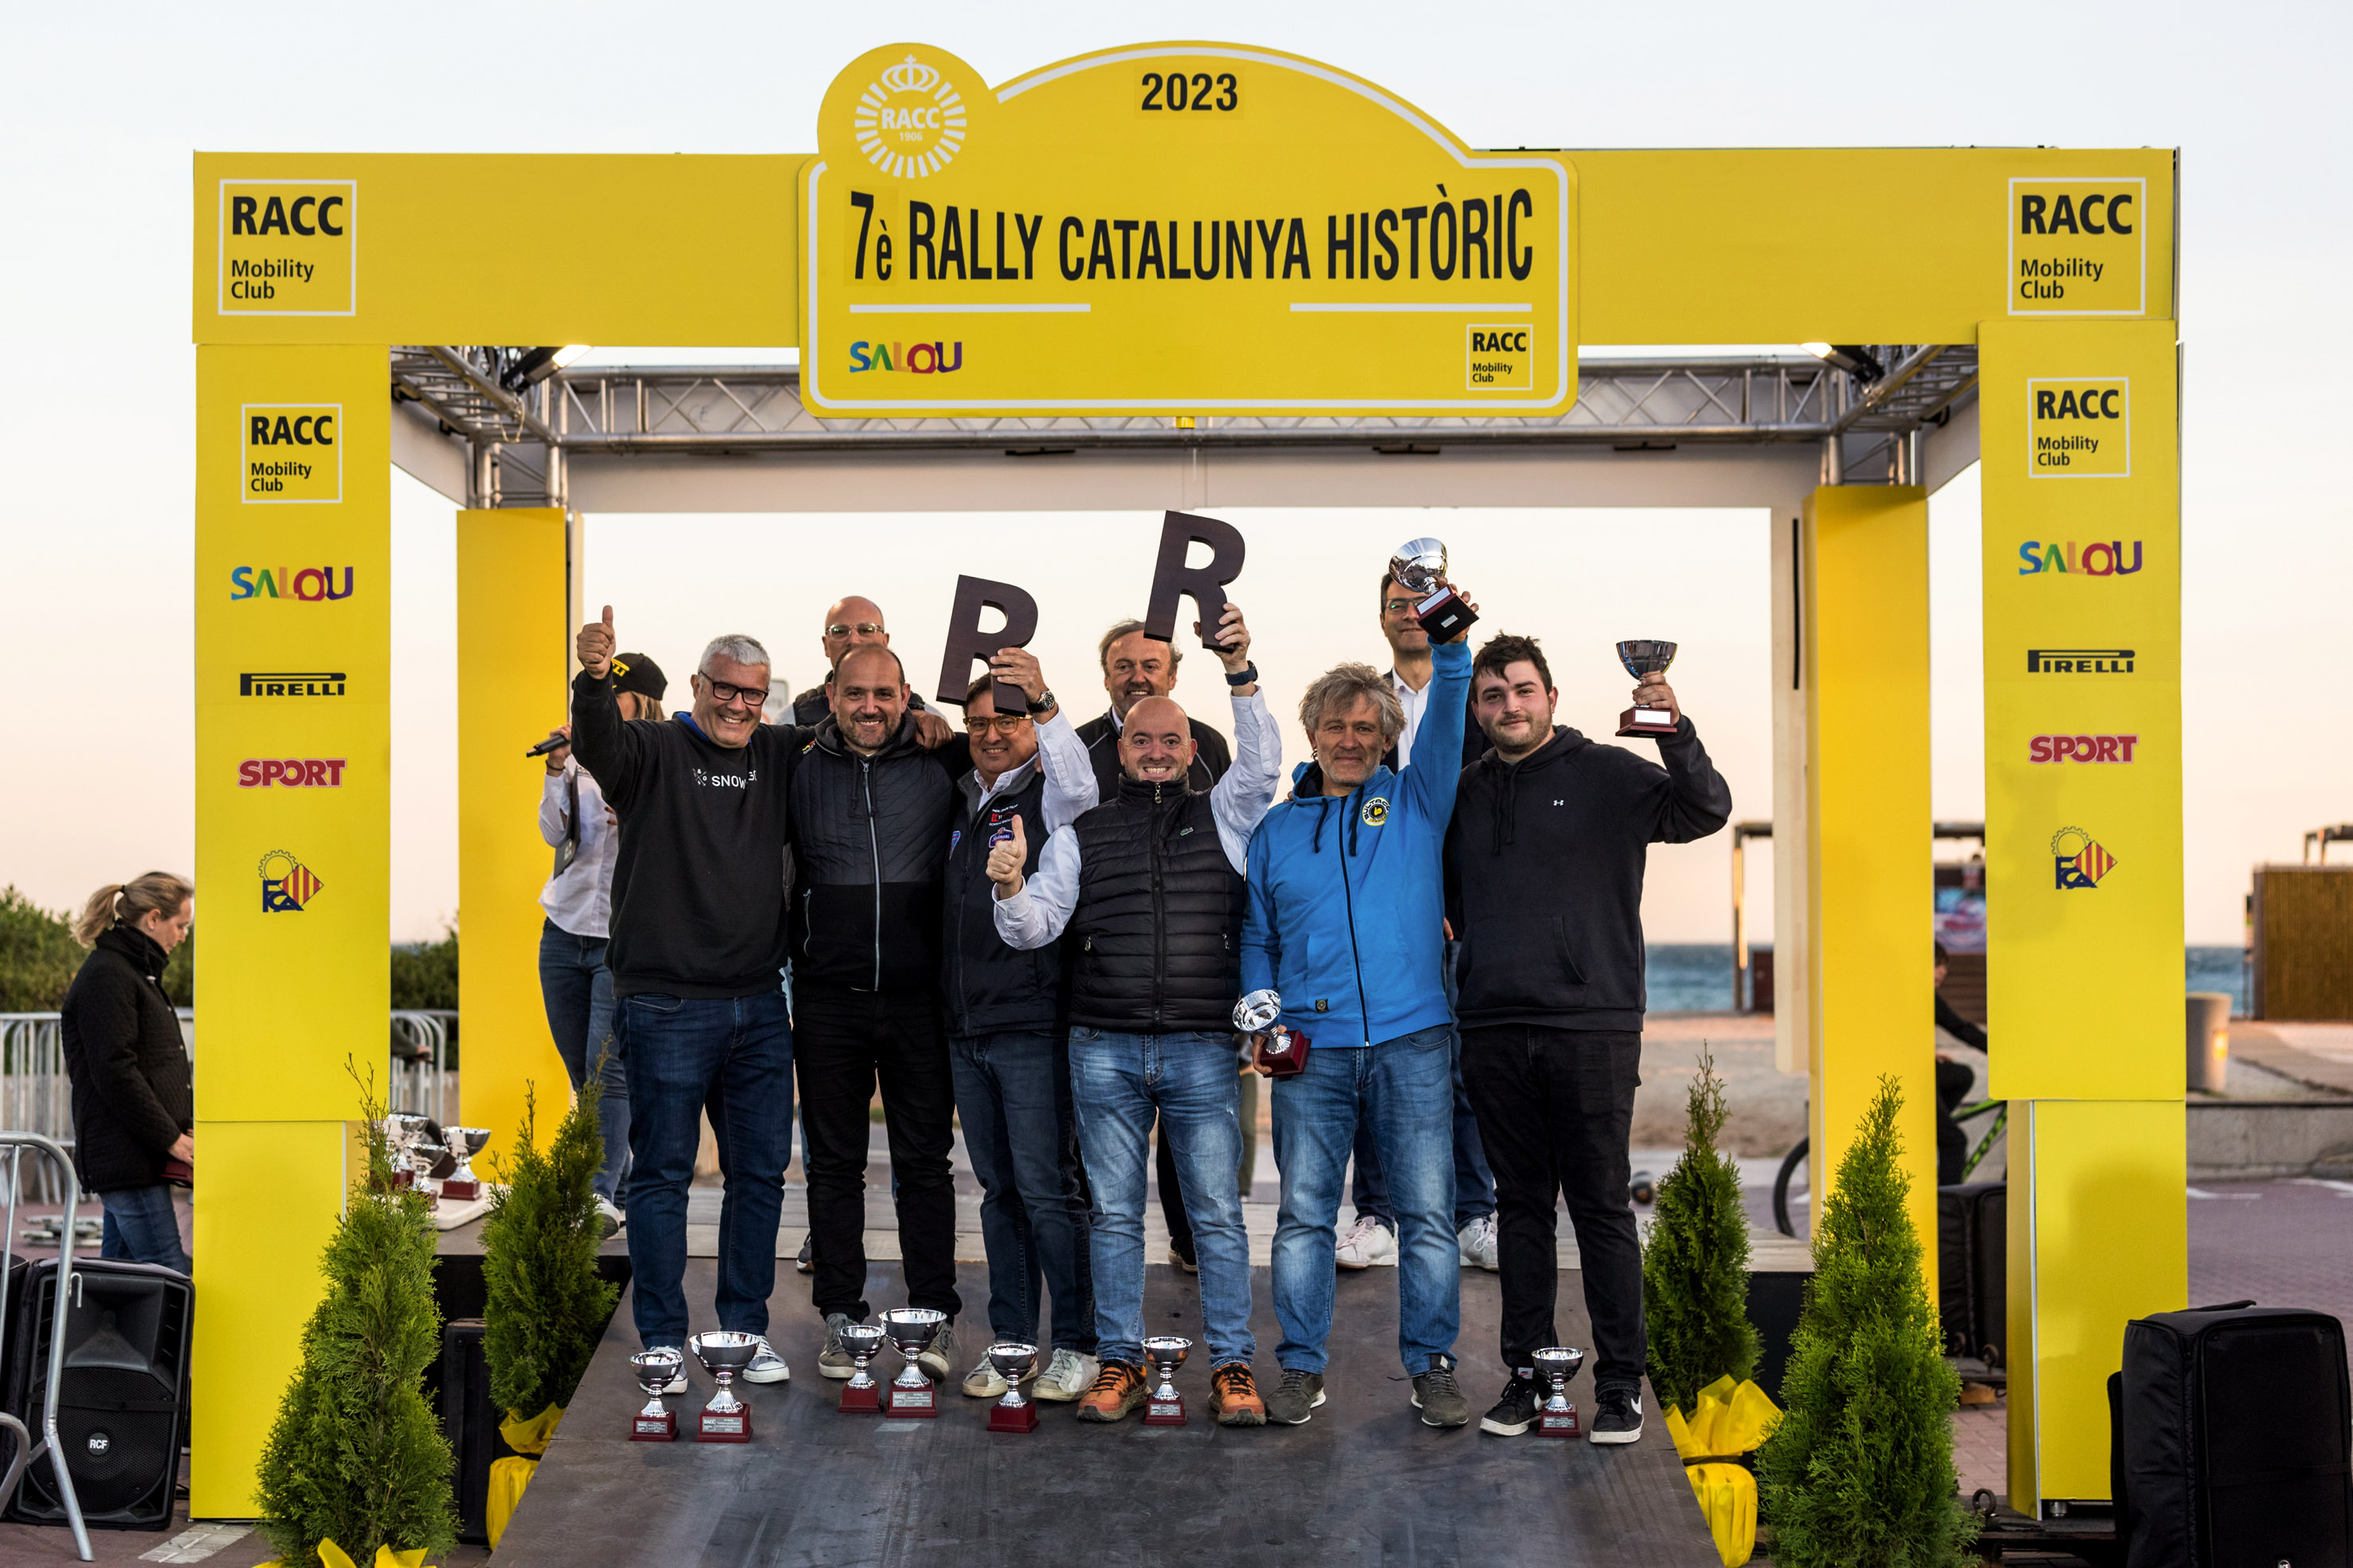 rallycatalunya_historic 7è Rally Catalunya Històric